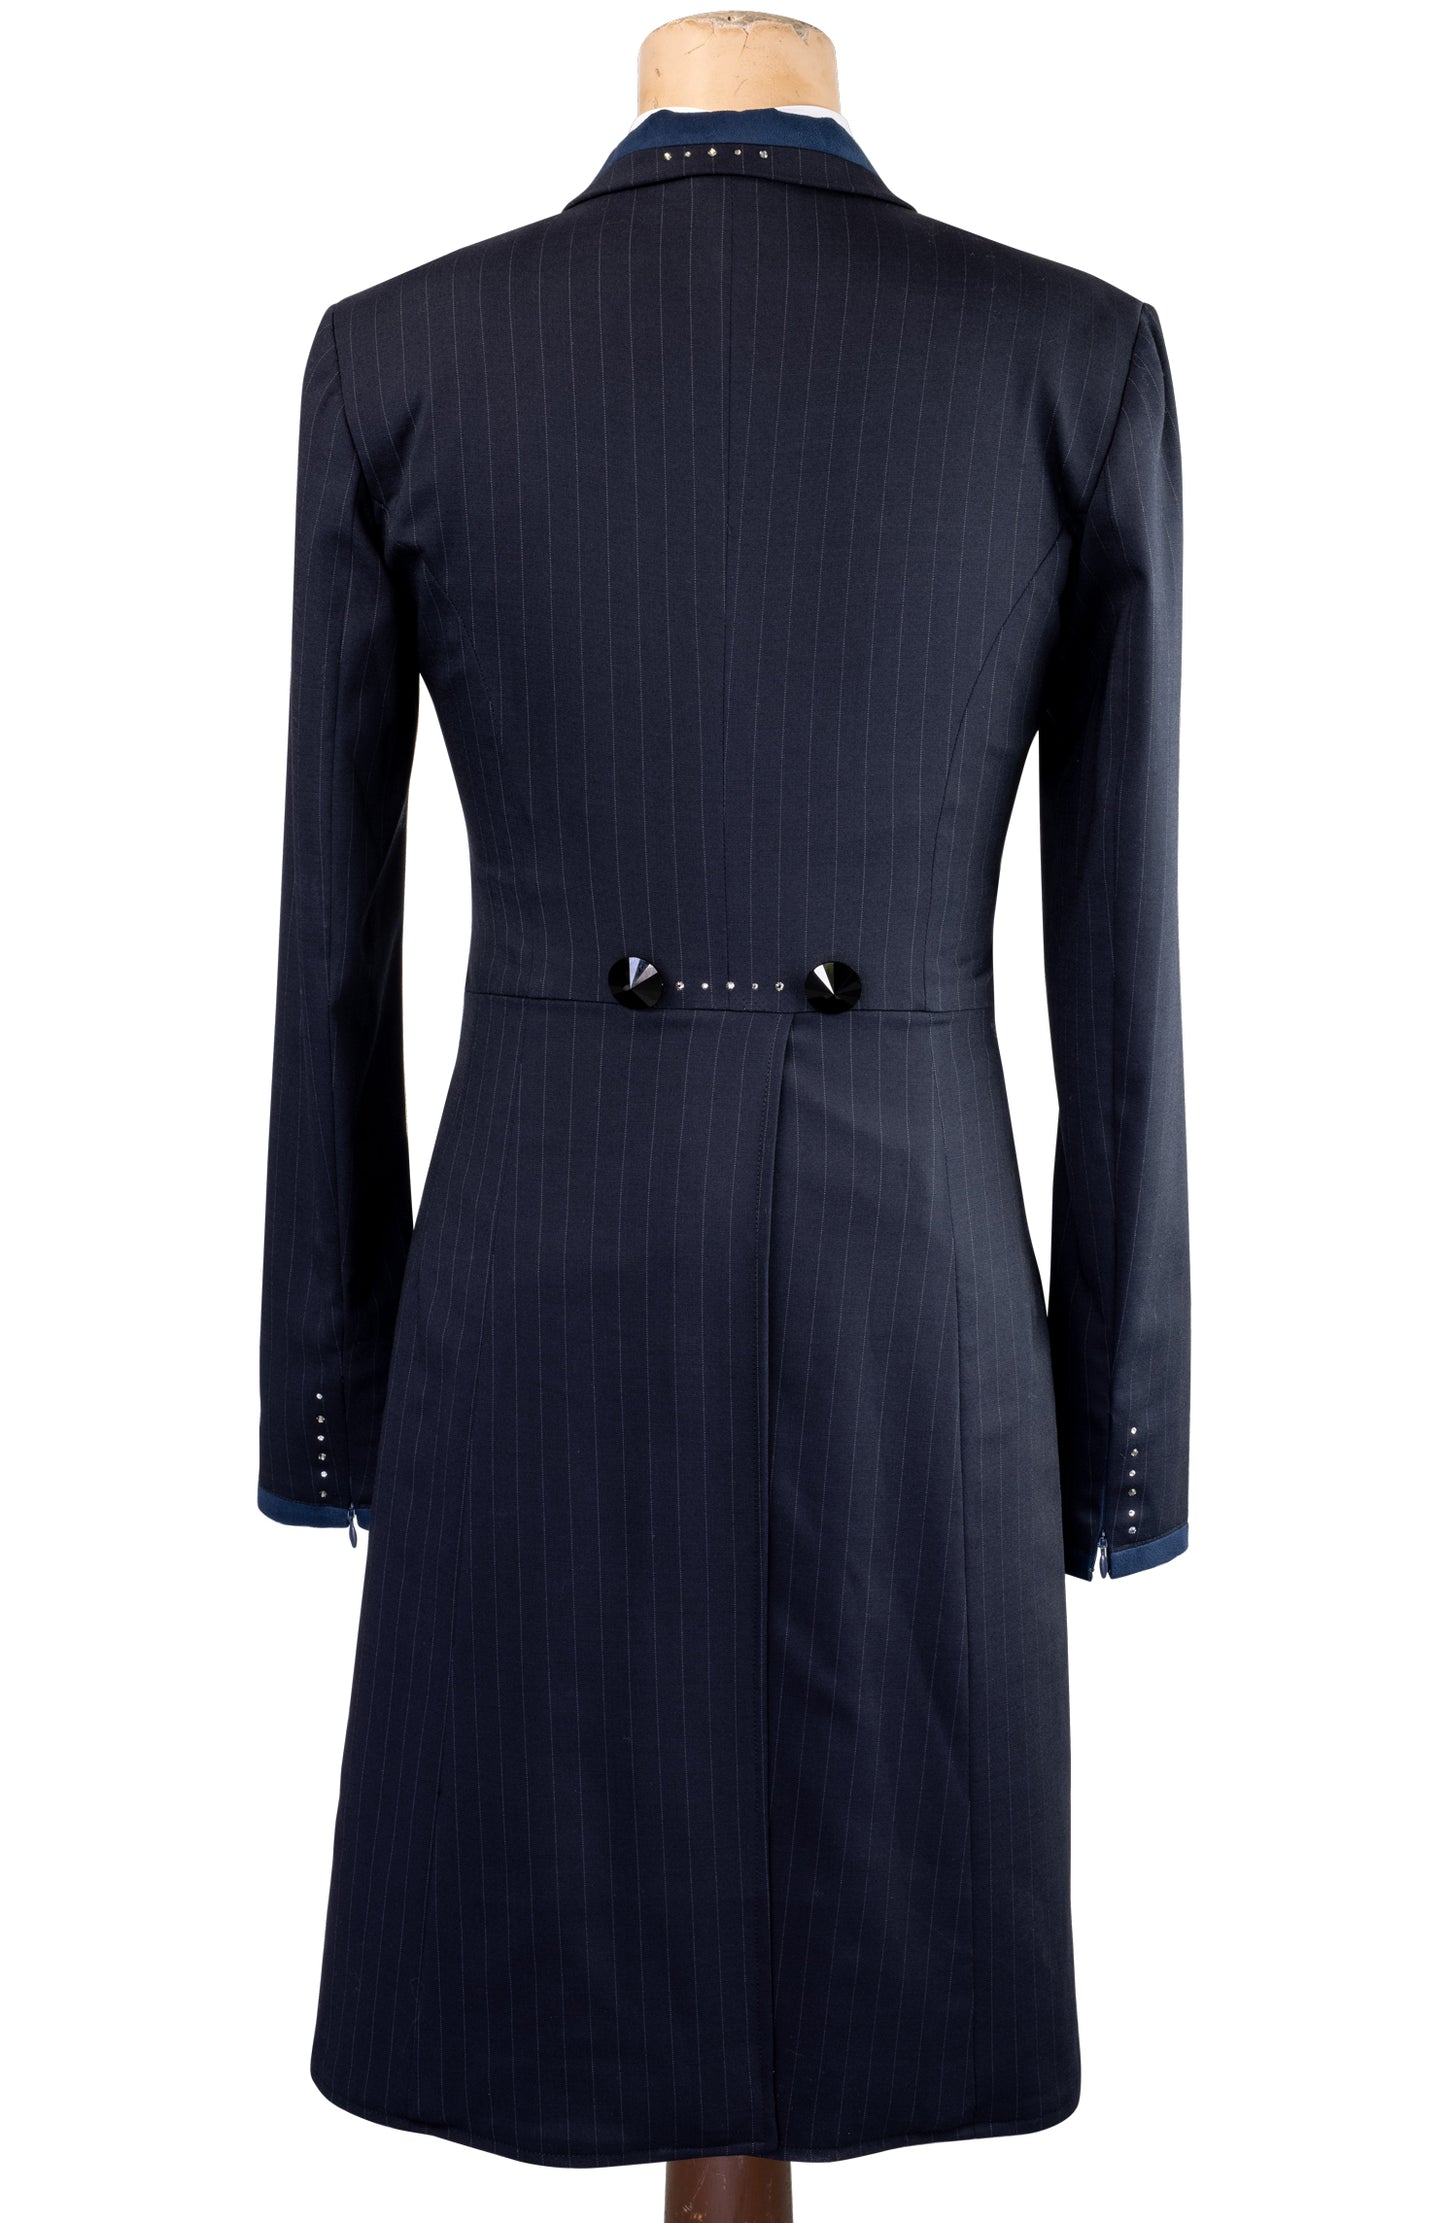 Limited Edition Ladies Navy Stretch Dressage Tailcoat with Swarovski Detailing